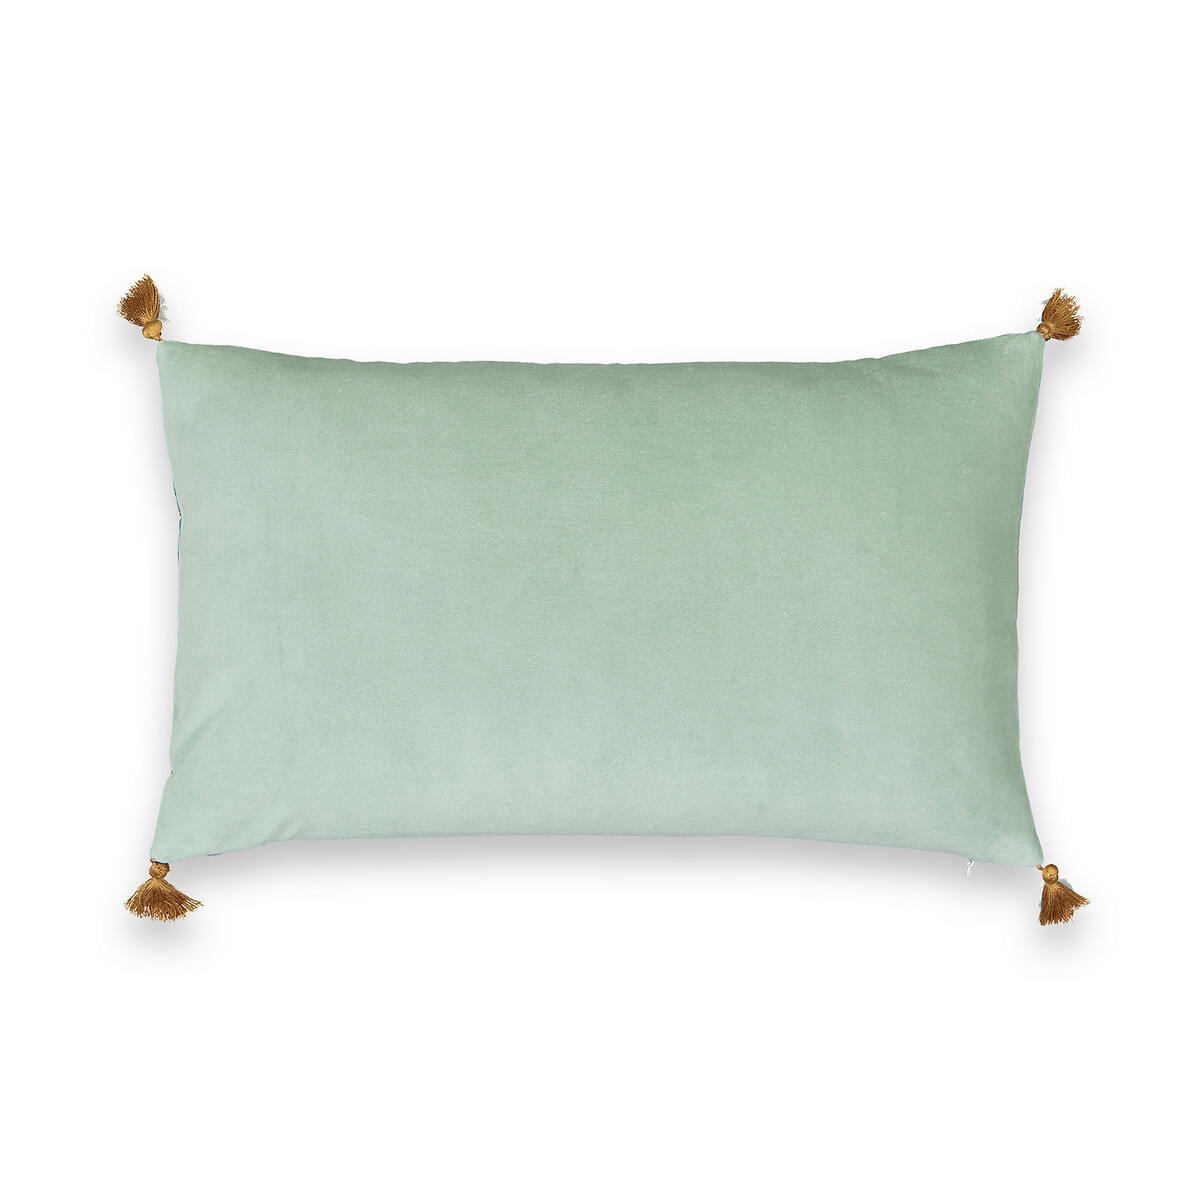 Чехол LaRedoute На подушку из велюра с принтом Olden 50 x 30 см зеленый, размер 50 x 30 см - фото 2